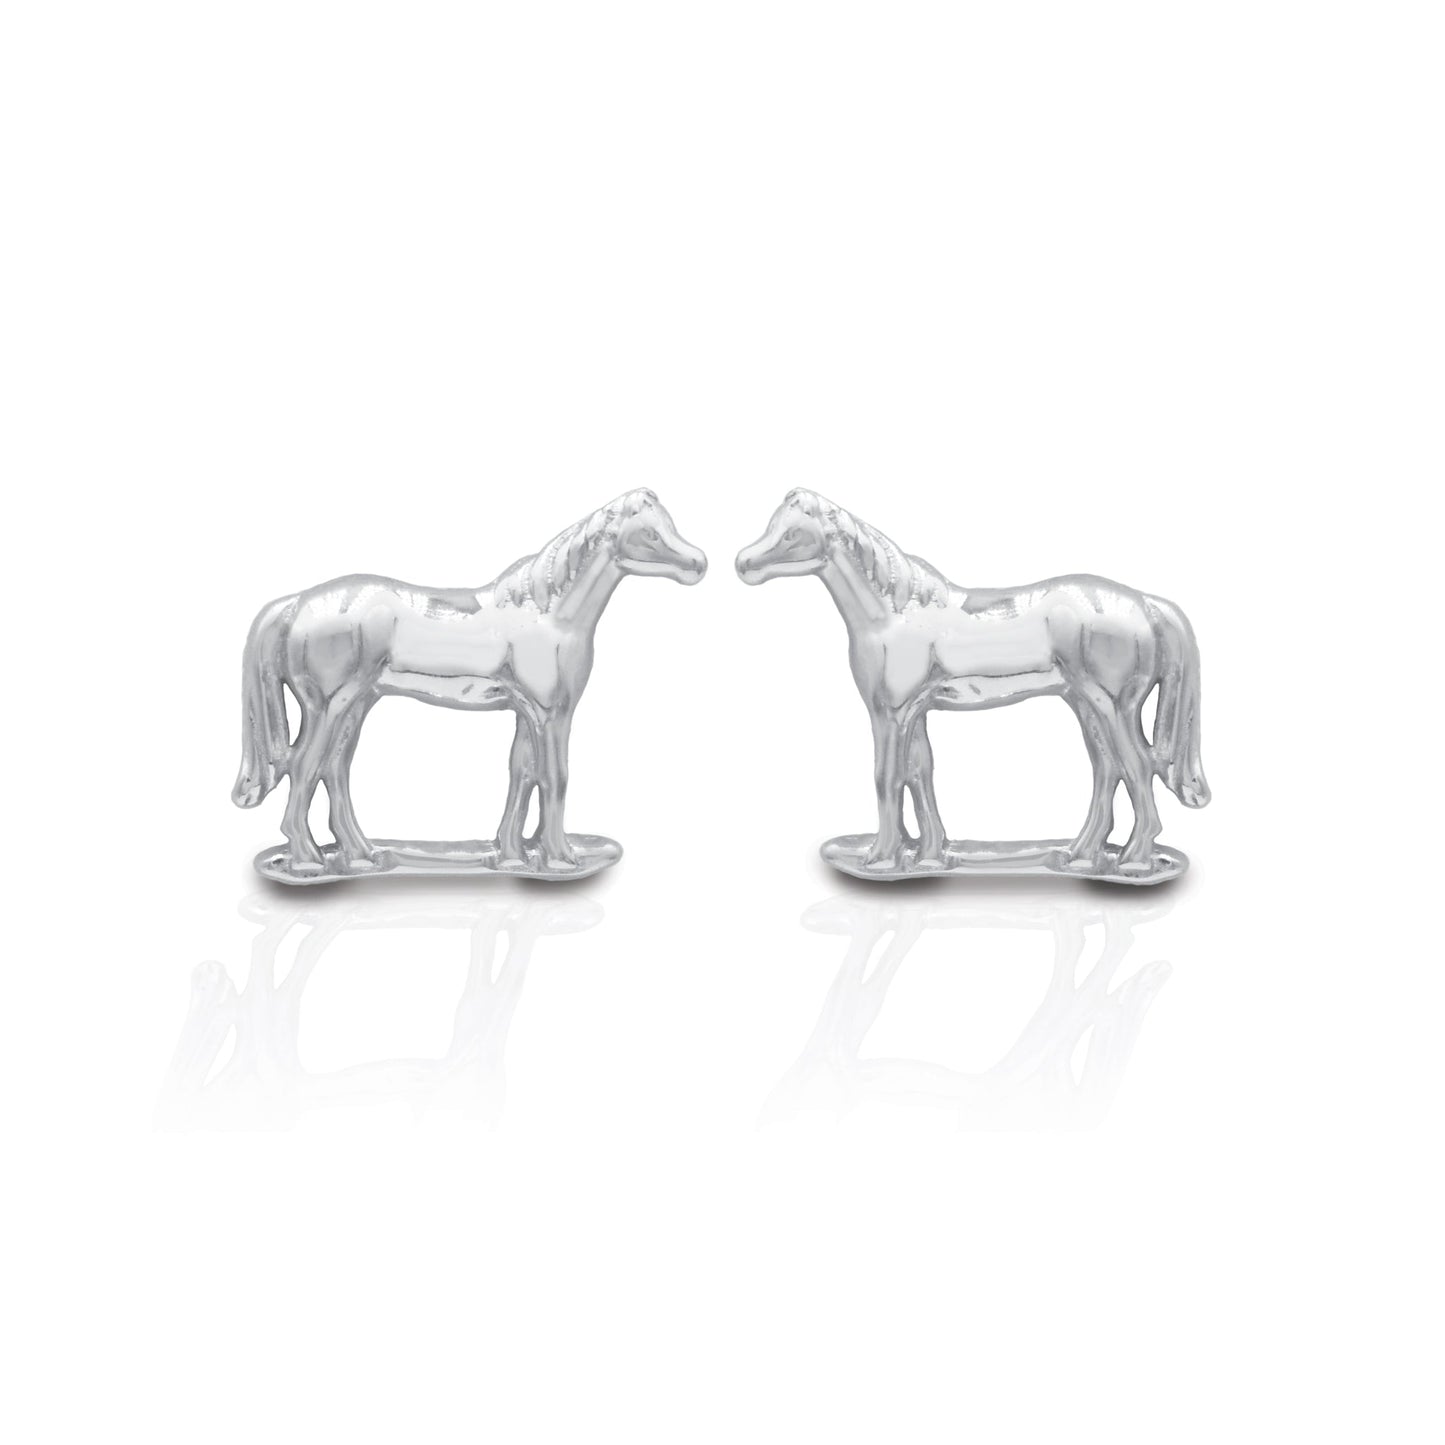 Kelly Herd sterling silver horse-shaped stud earrings on white background.